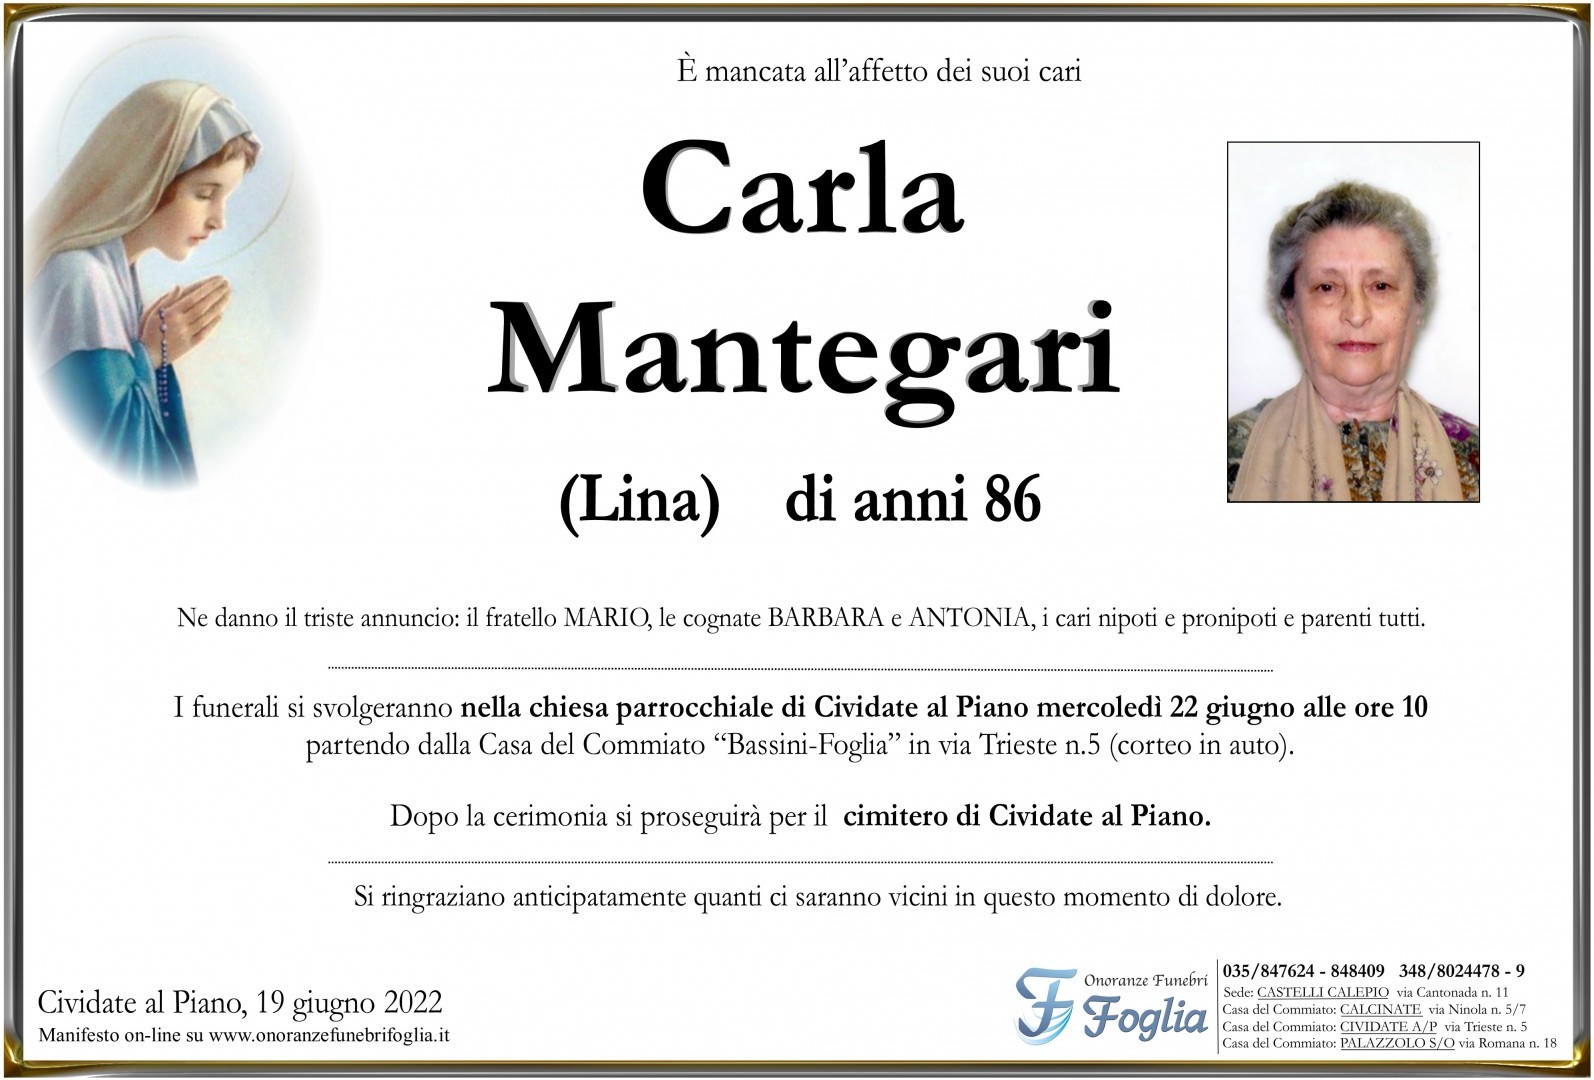 Carla Mantegari